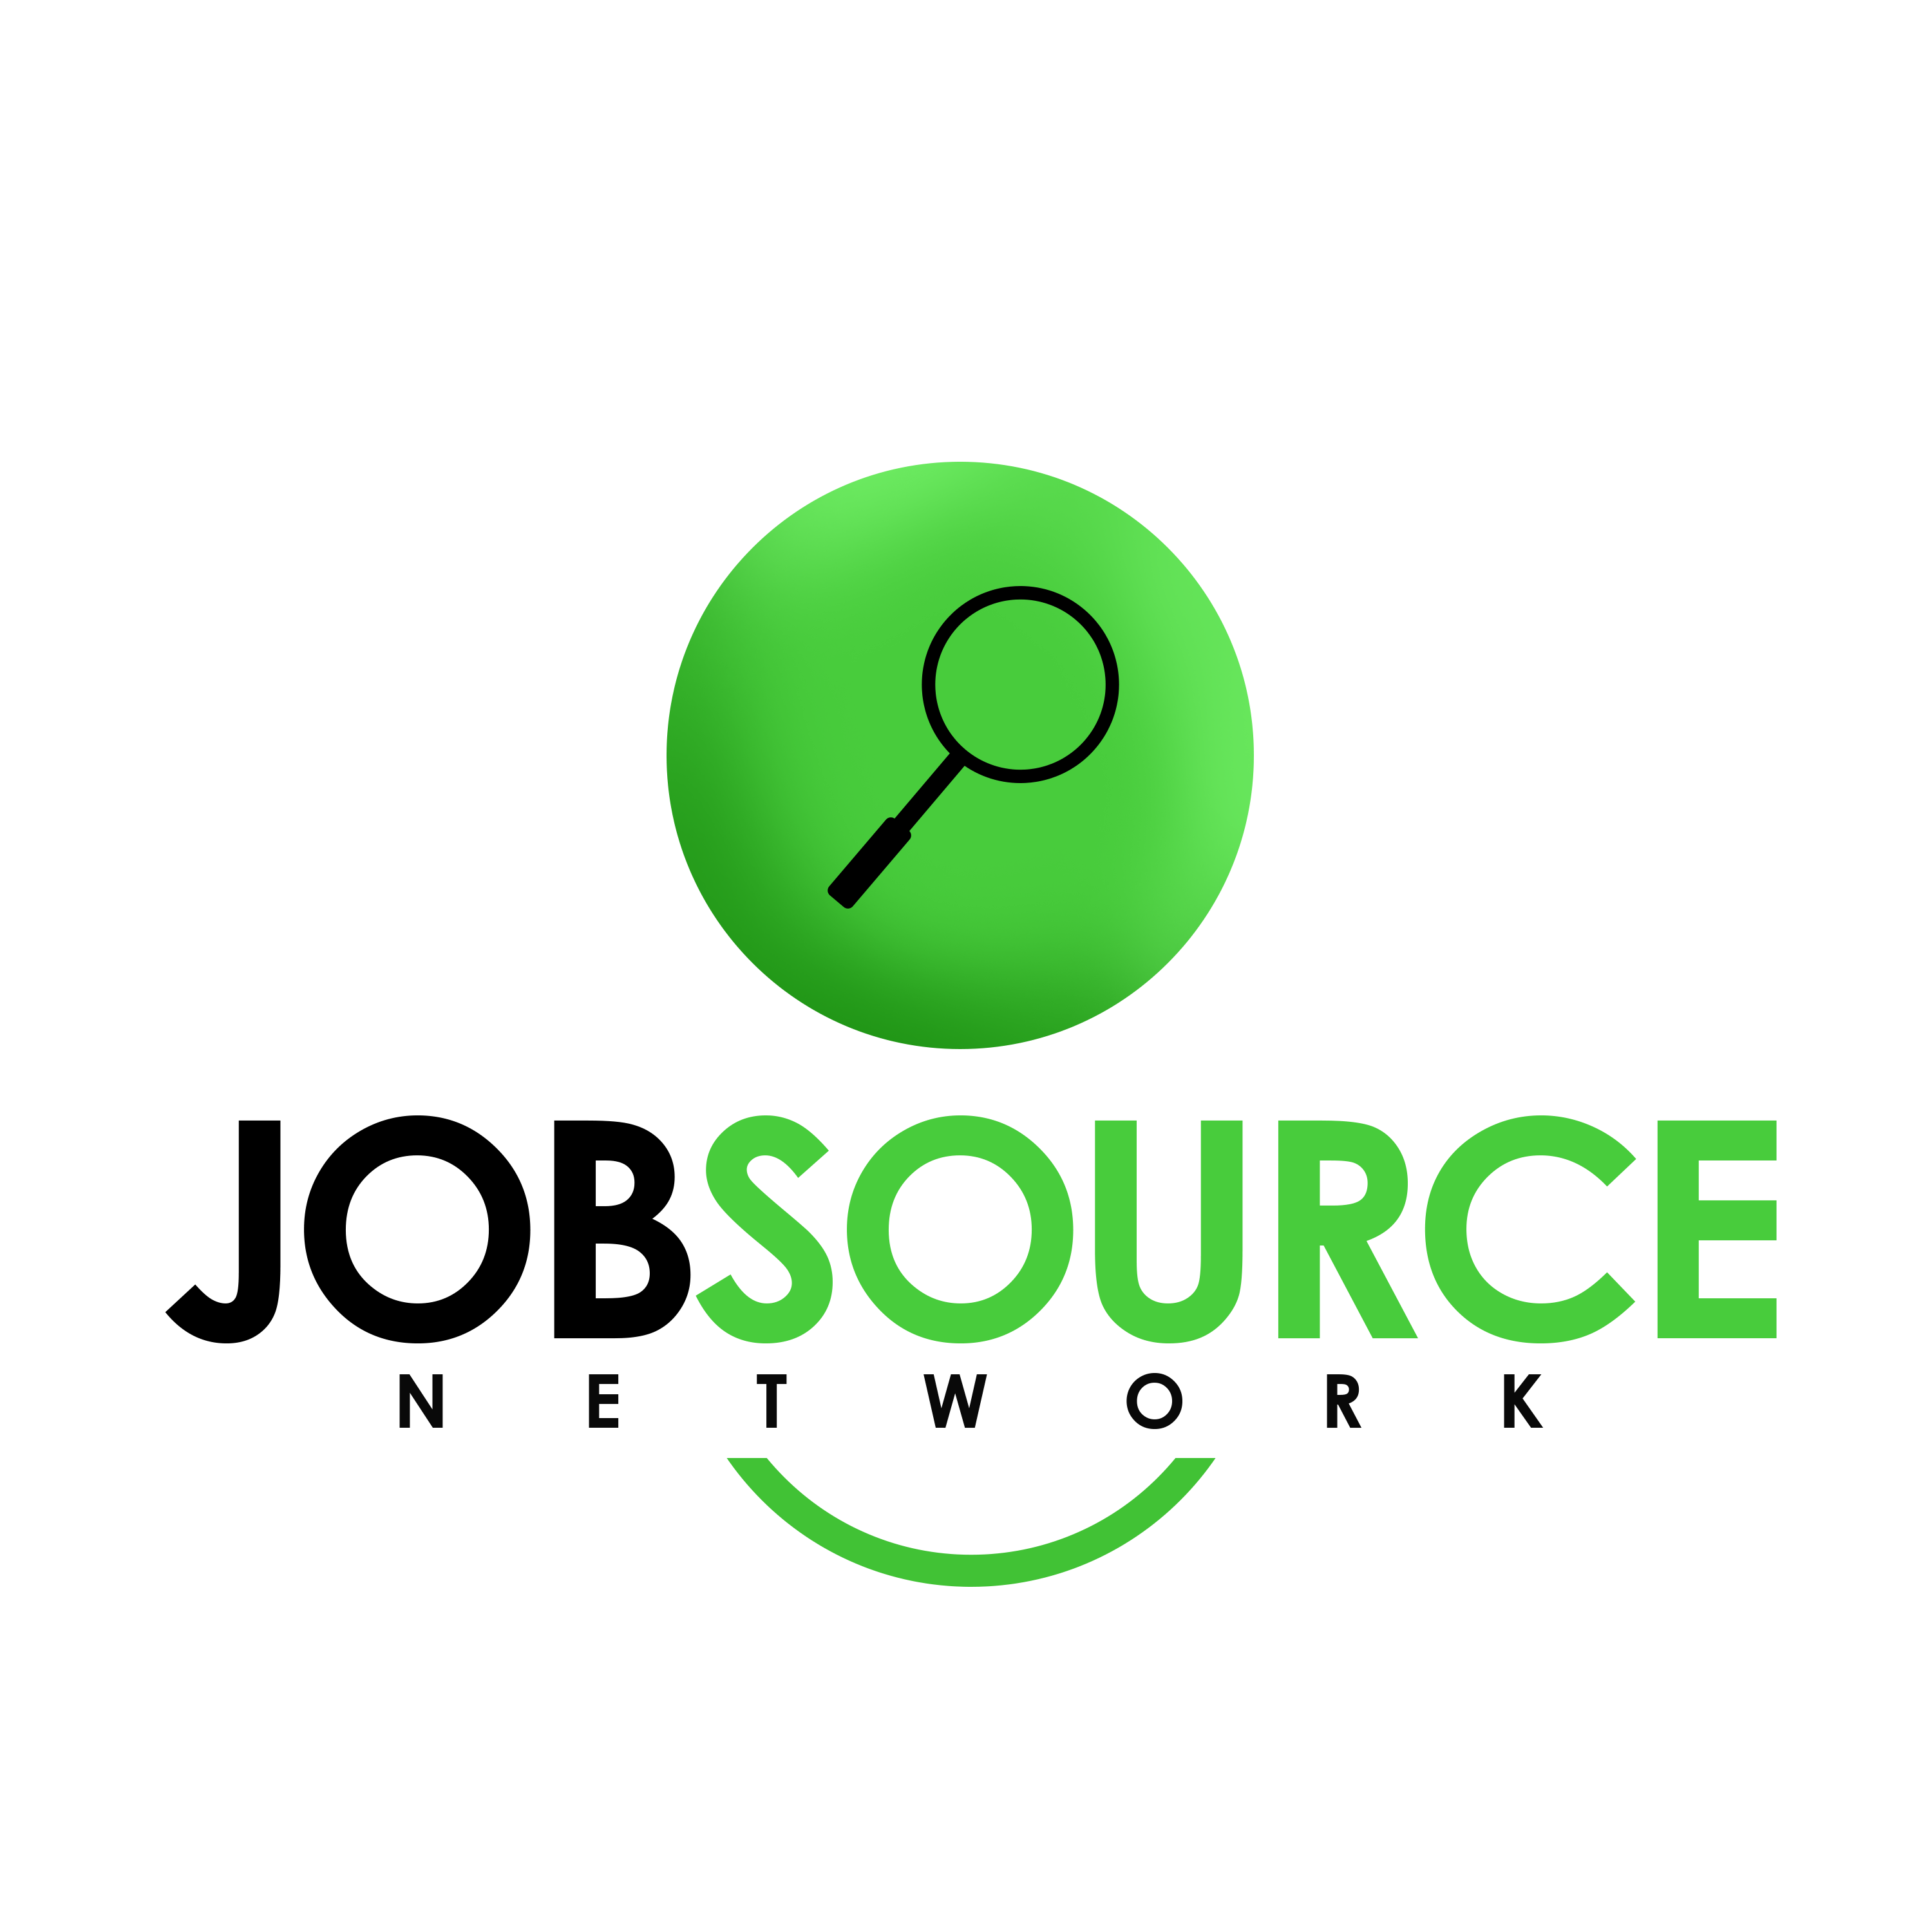 Job Source Network